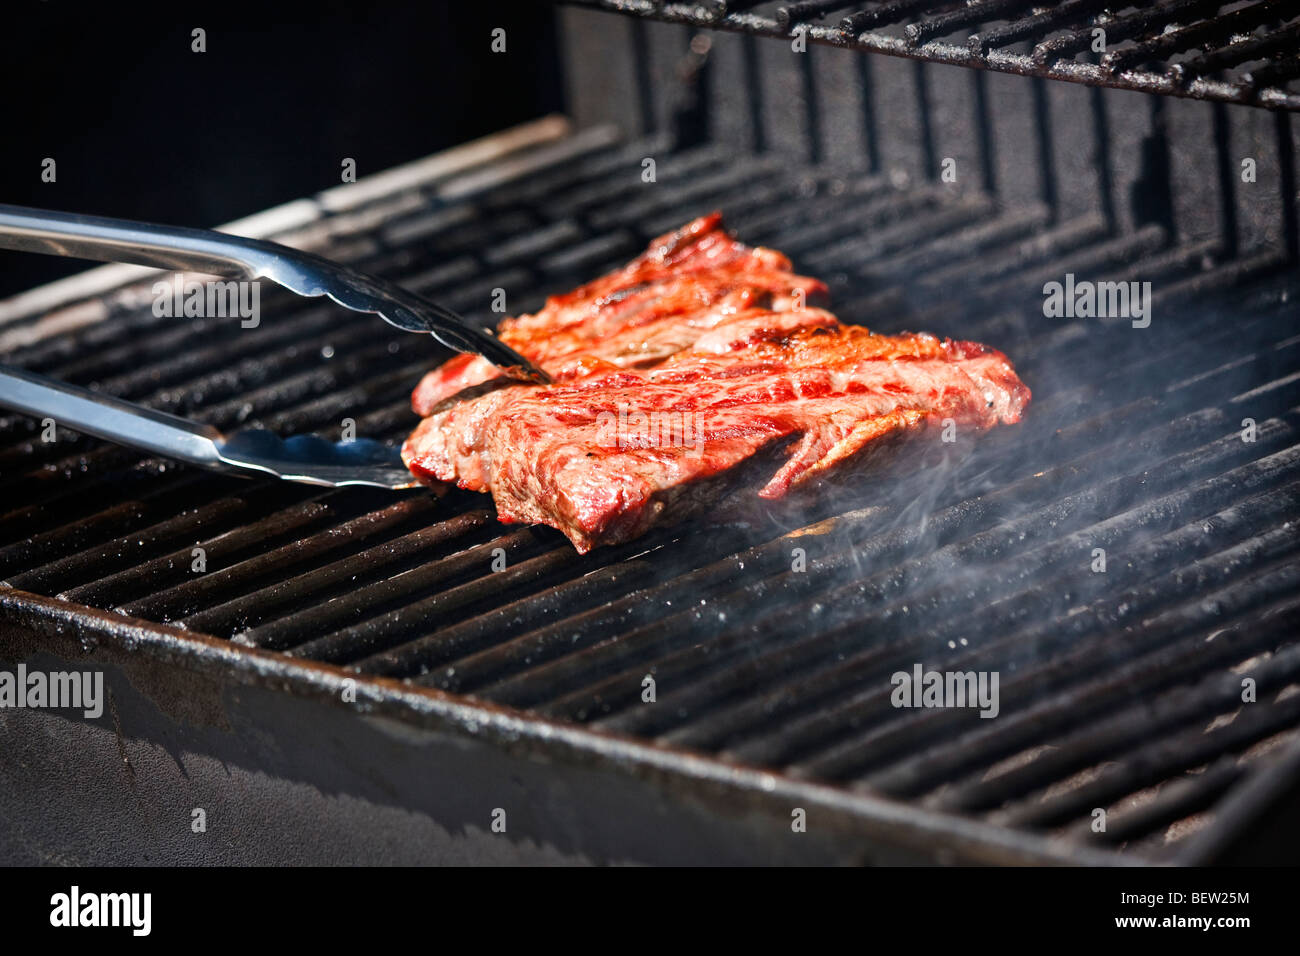 Grilling beef steak Stock Photo